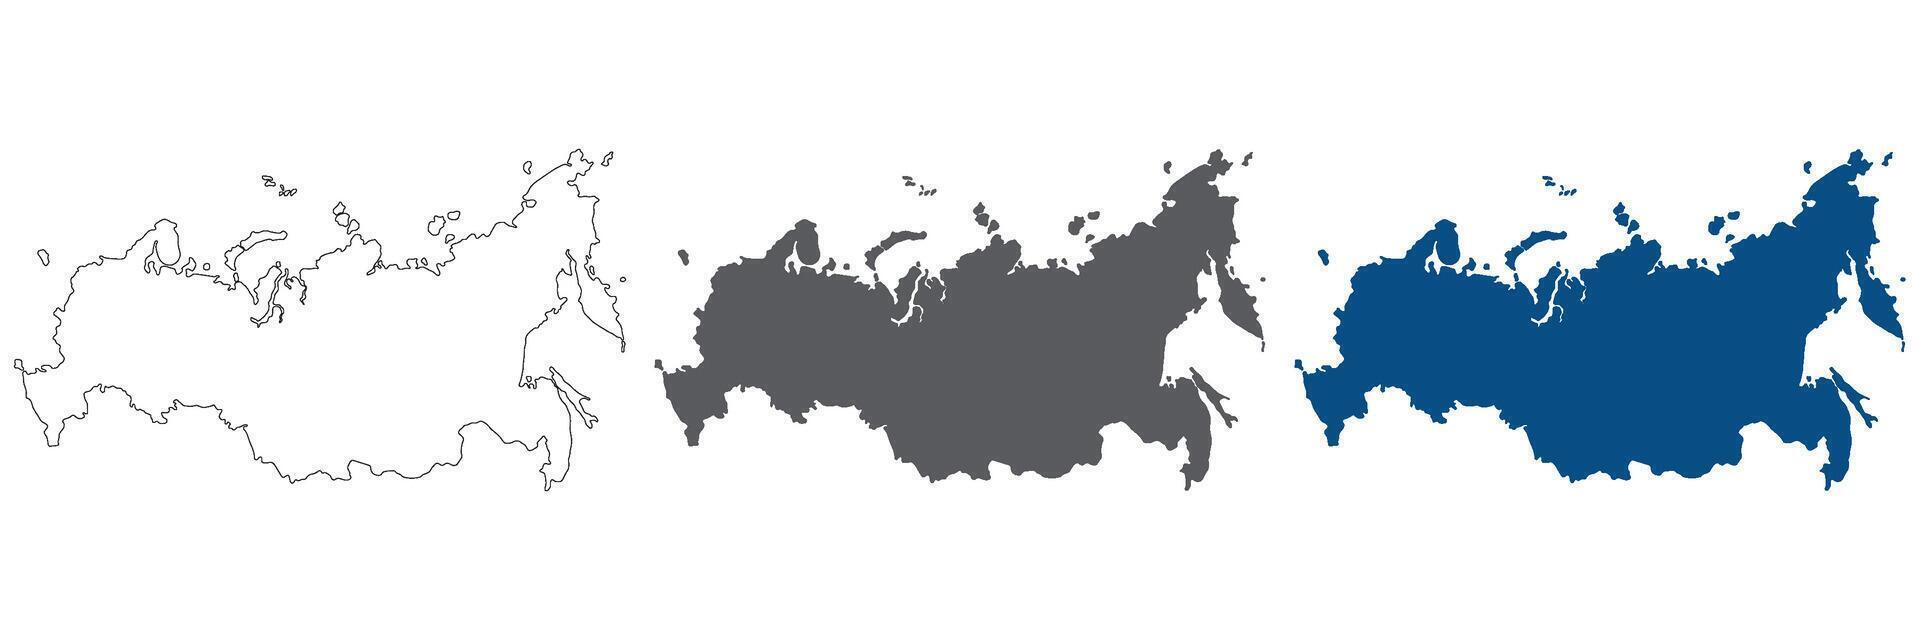 Rusland kaart in groen kleur kaart van Rusland vector